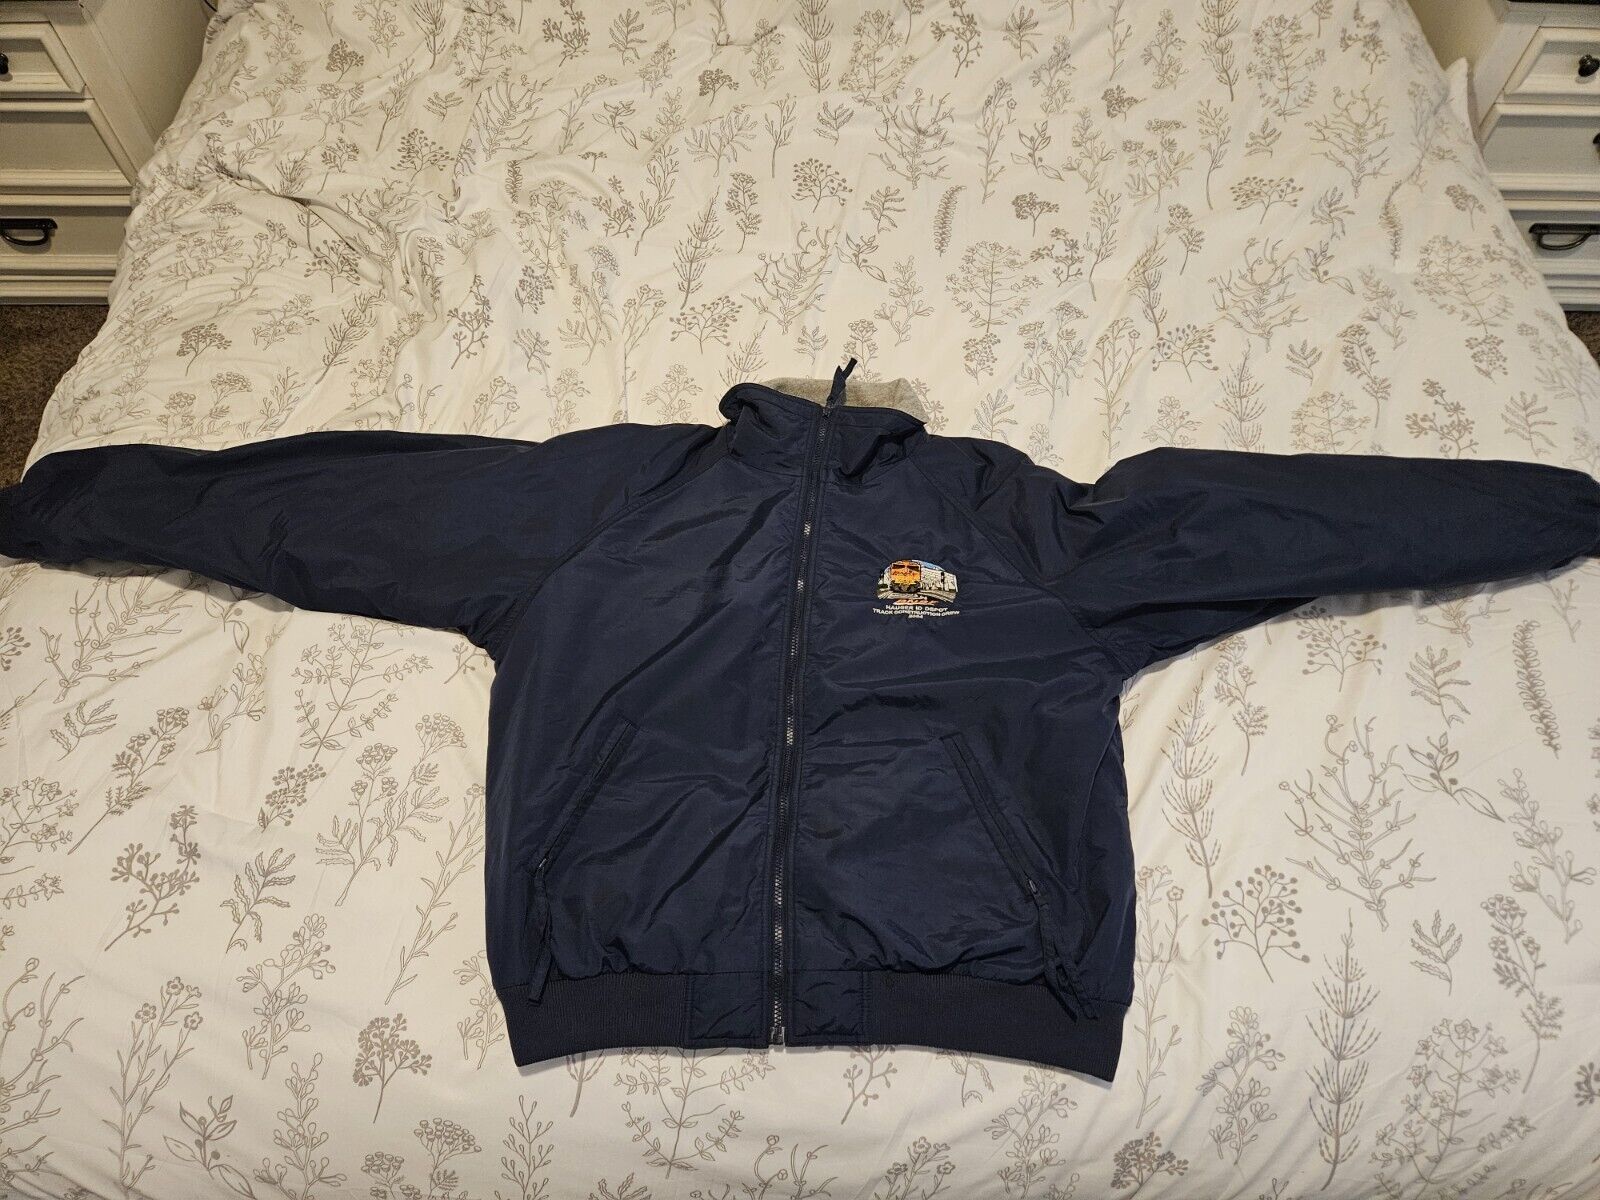  Vtg Bnsf Jacket. 2004 Hauser Idaho Size XL